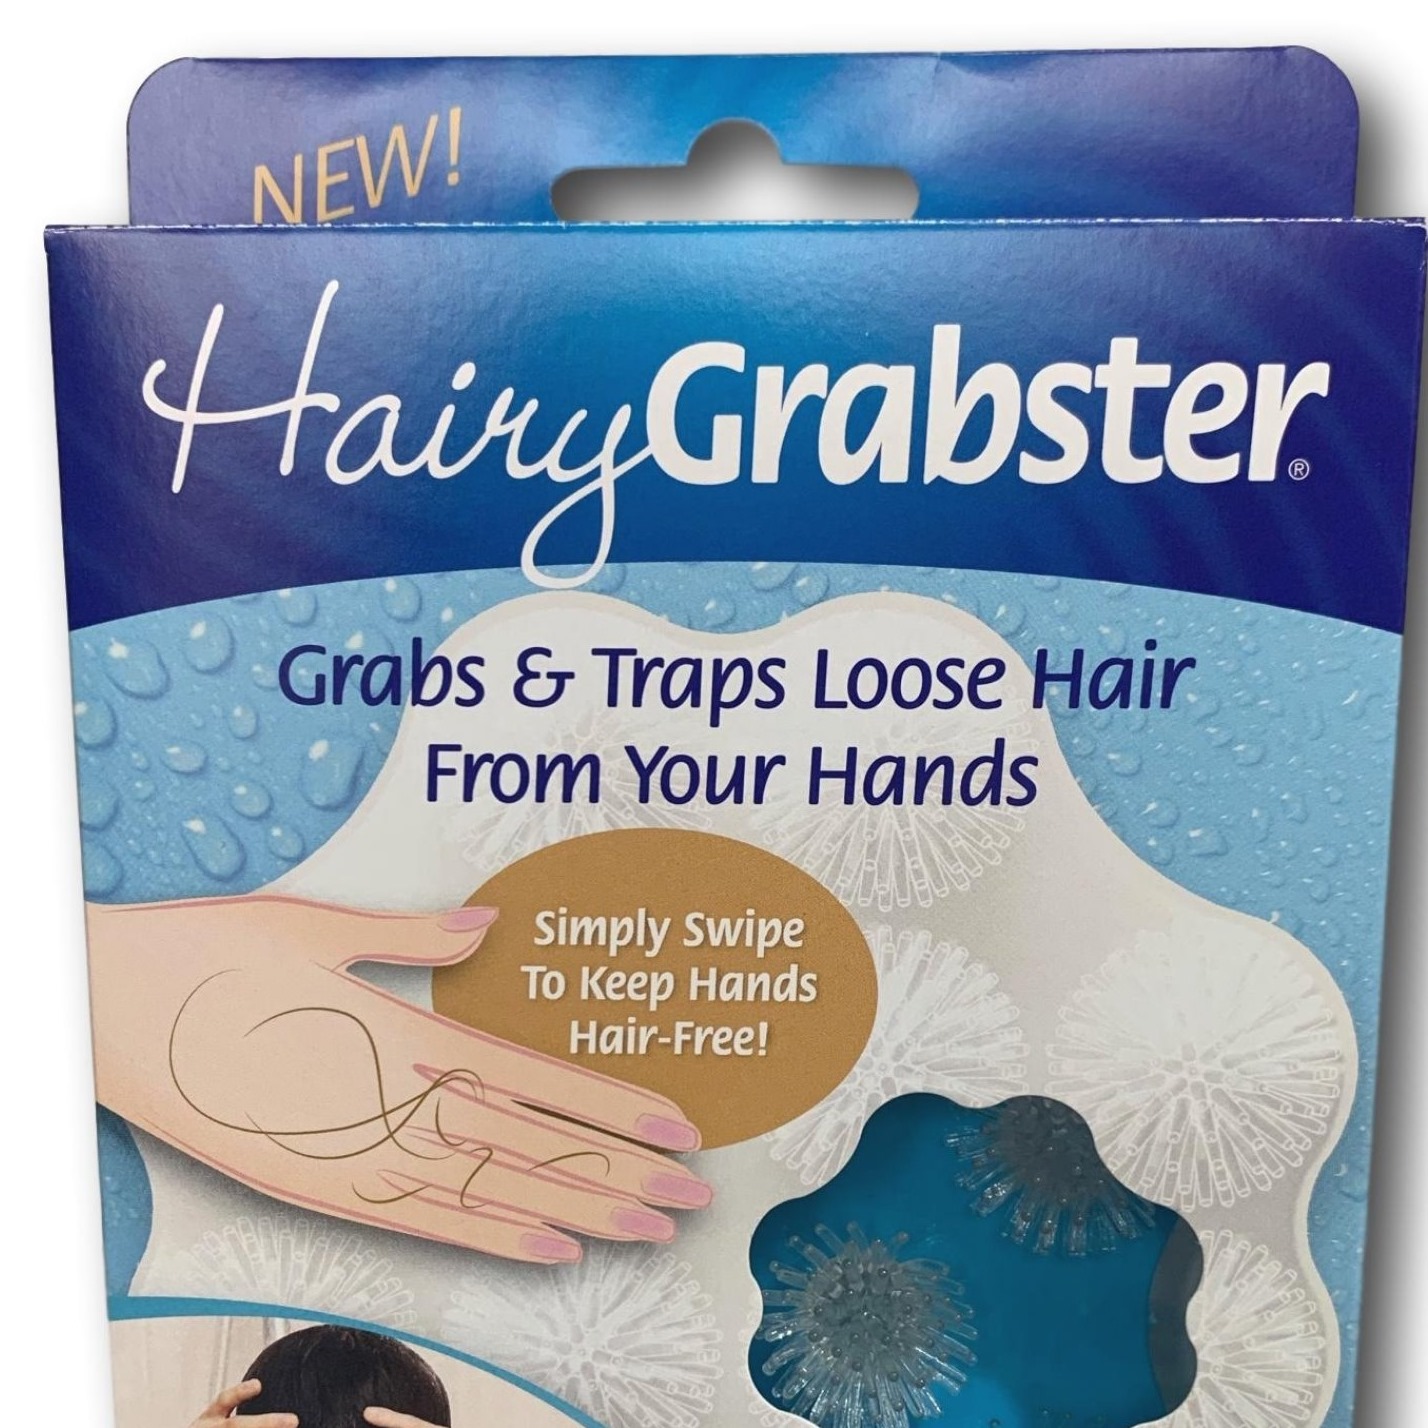 Hairy Grabster Shower Hair Trap Shark Tank Season 12